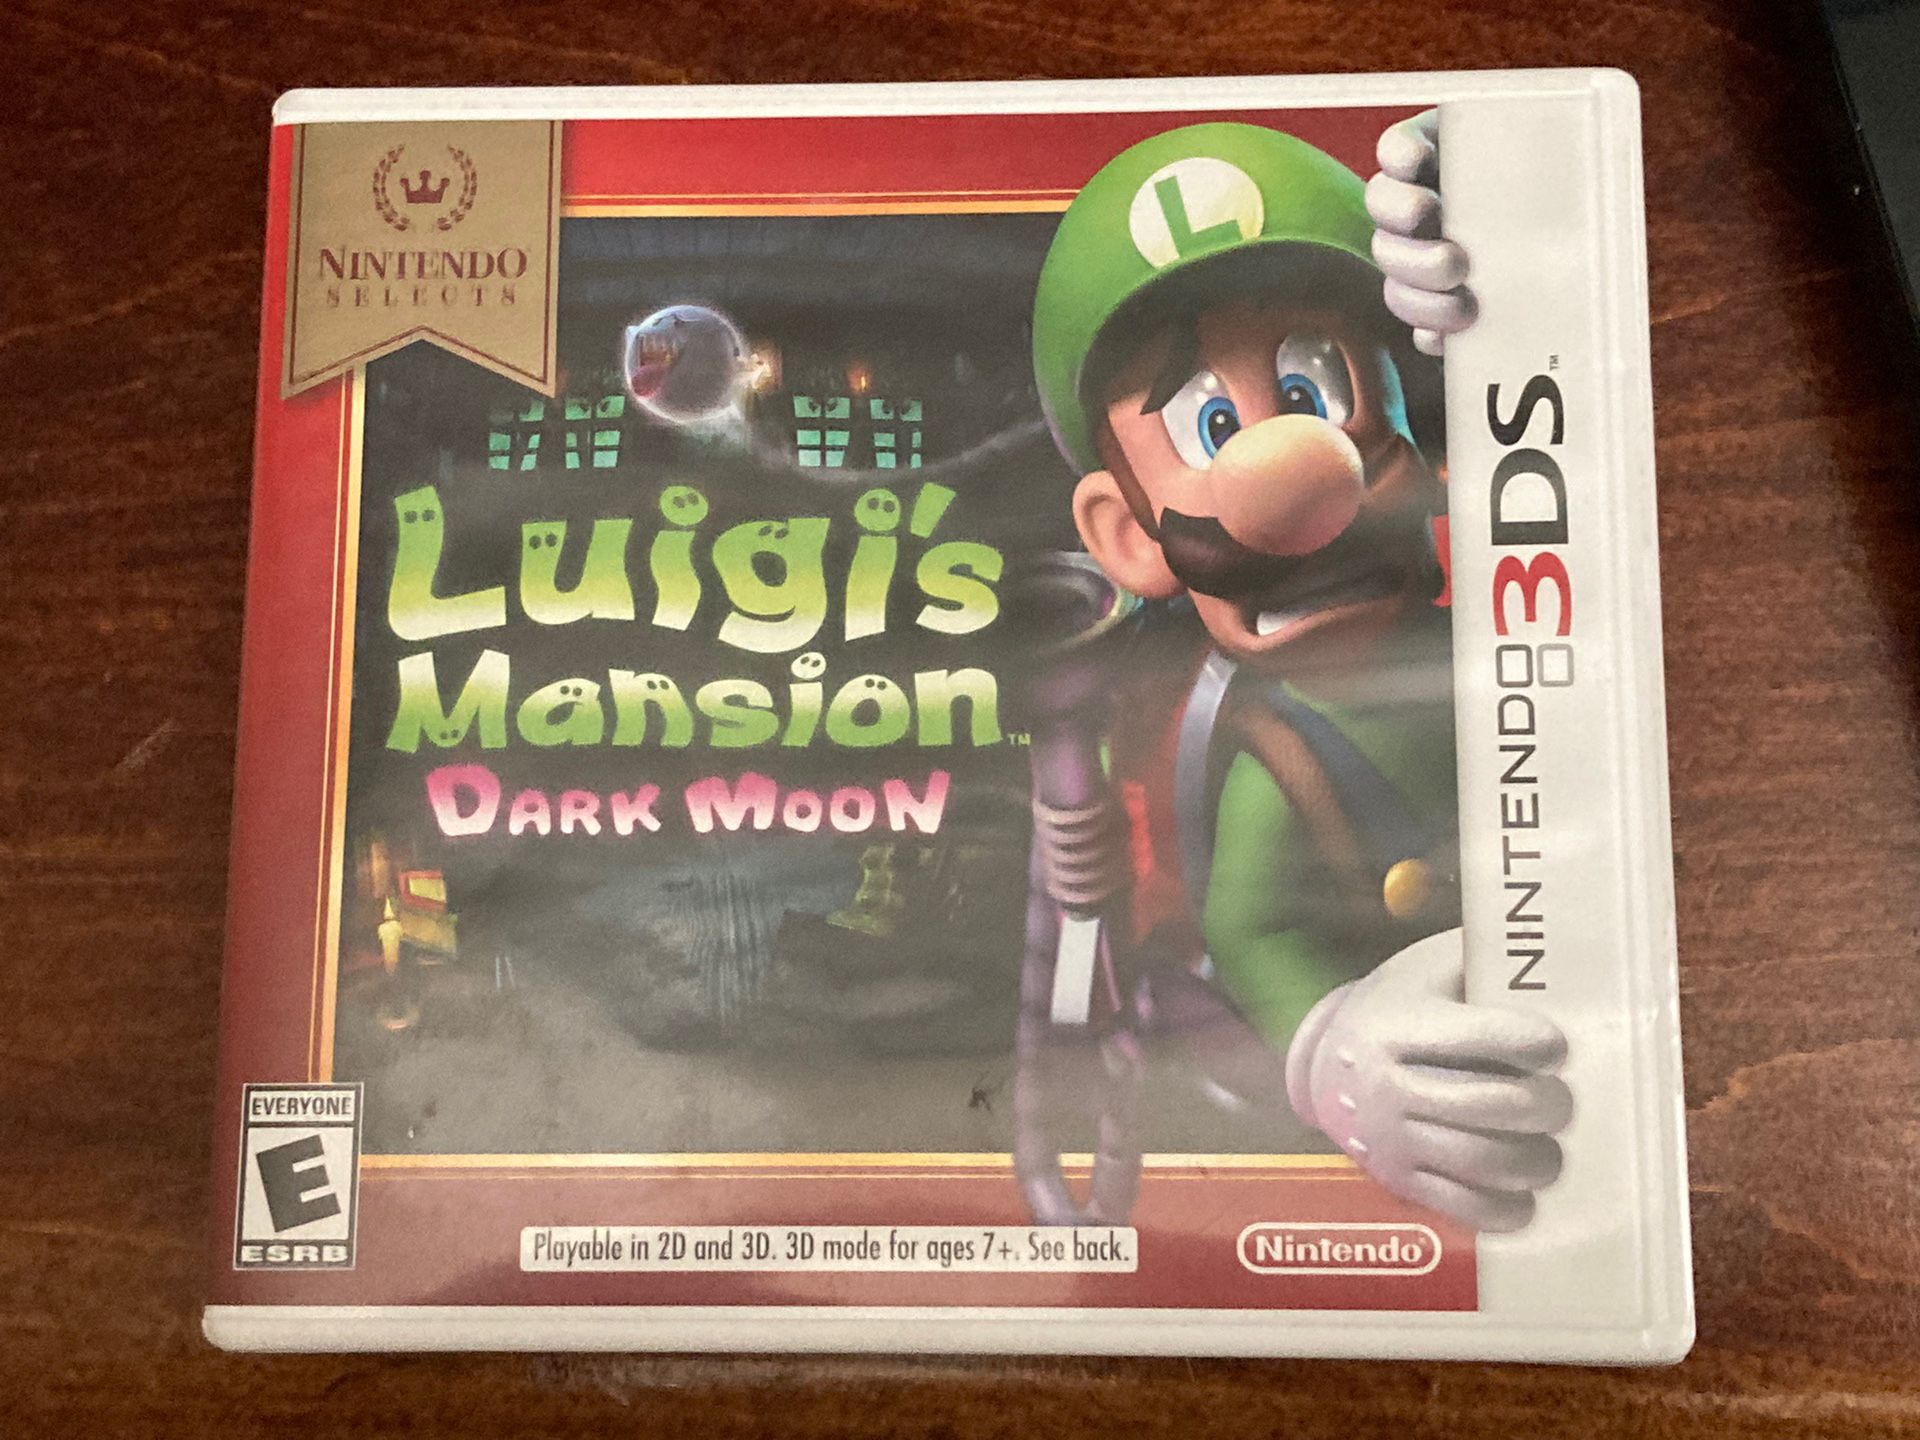 Luigi’s Mansion Dark Moon (For Nintendo 3ds)